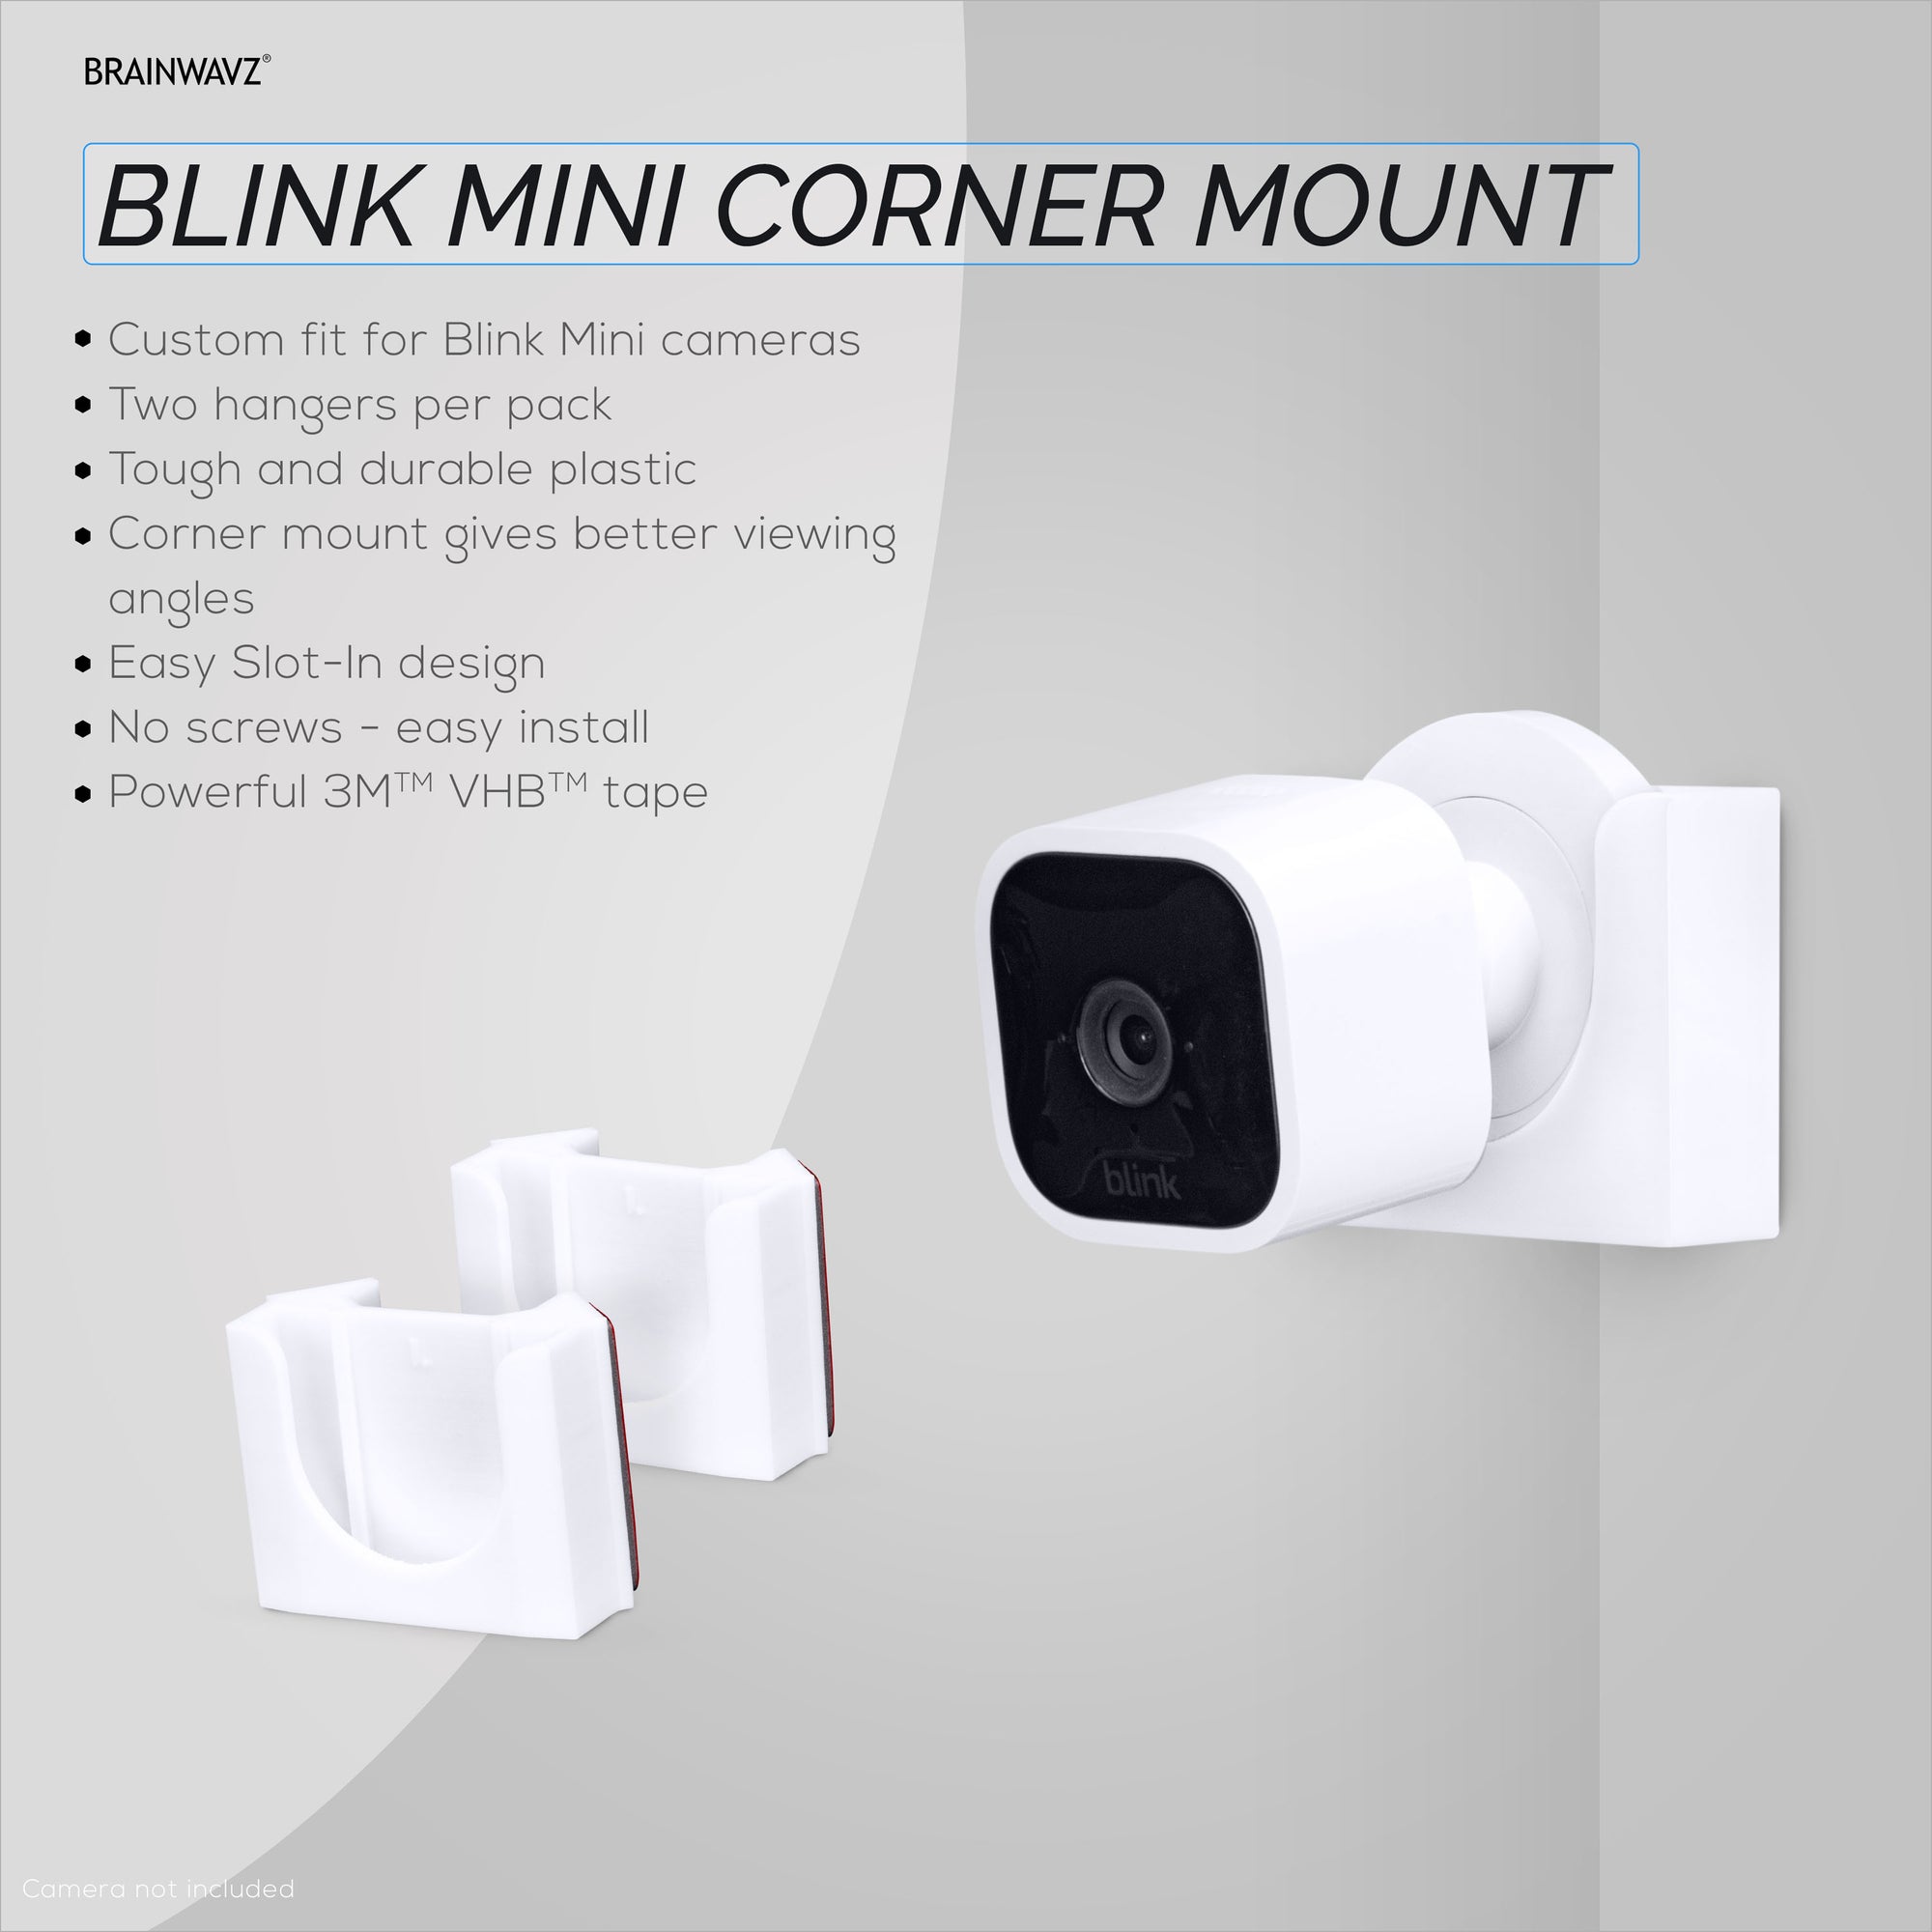 Adhesive Blink Indoor Corner Camera Mount (3rd Gen), 2 Pack Holder